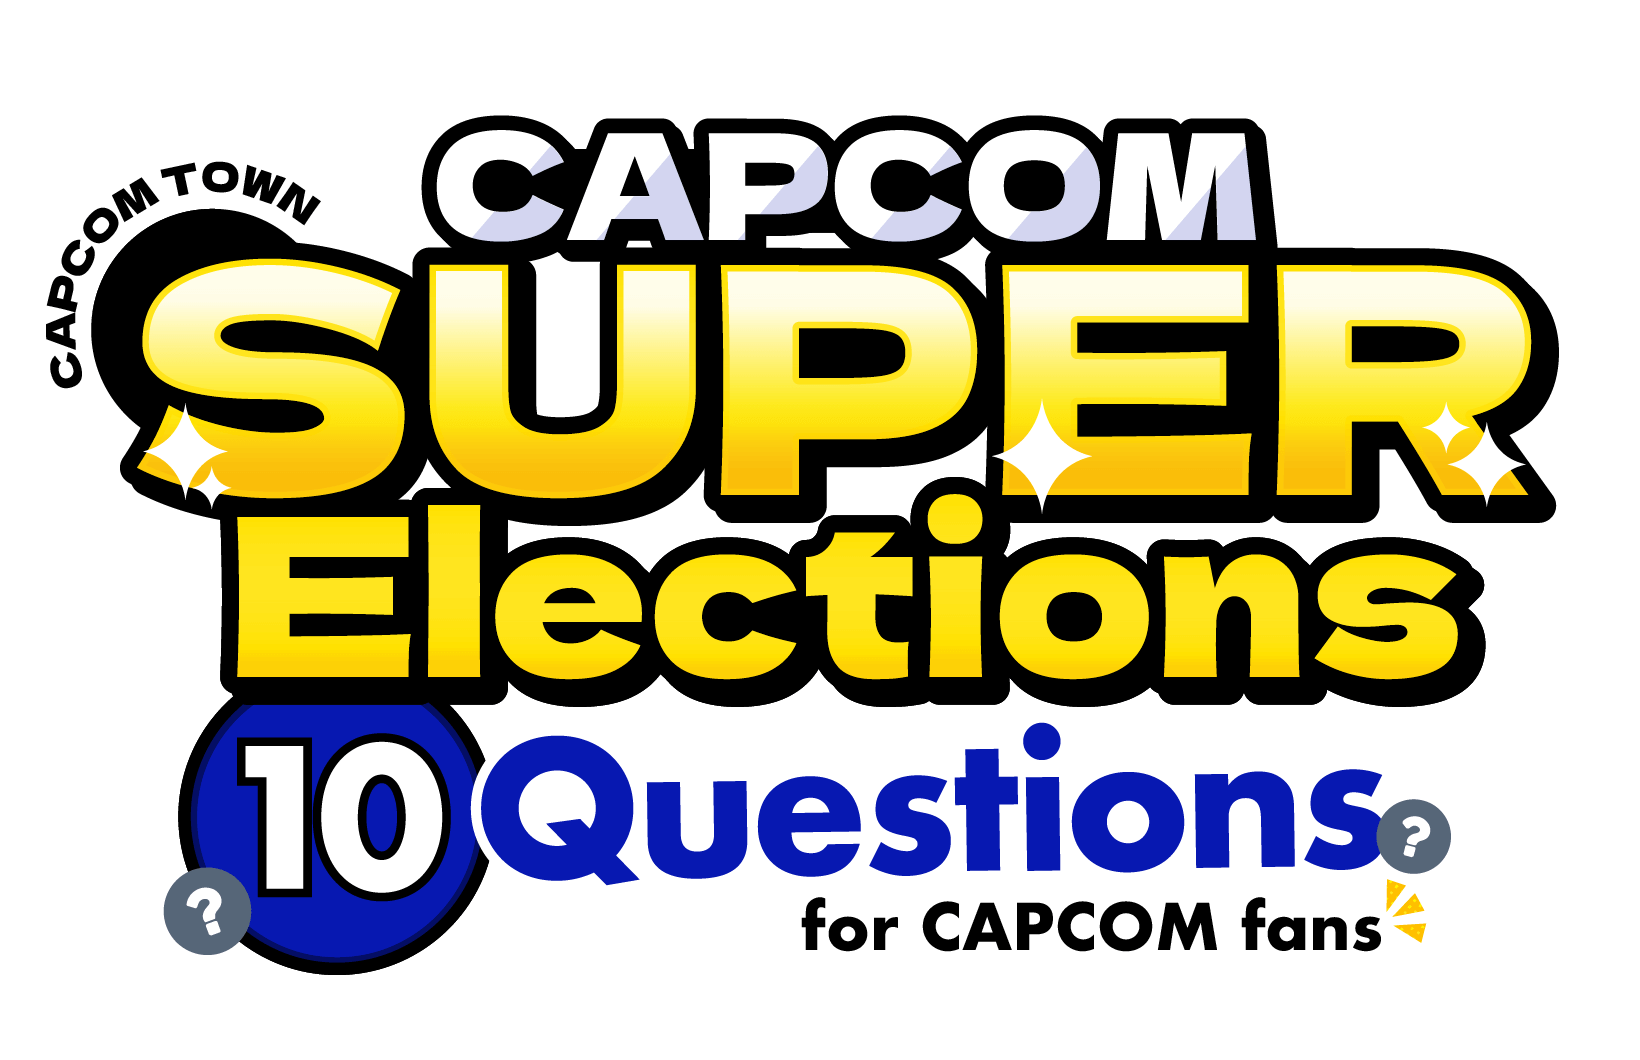 Capcom 슈퍼 인기투표: Capcom 팬들을 위한 10가지 질문!